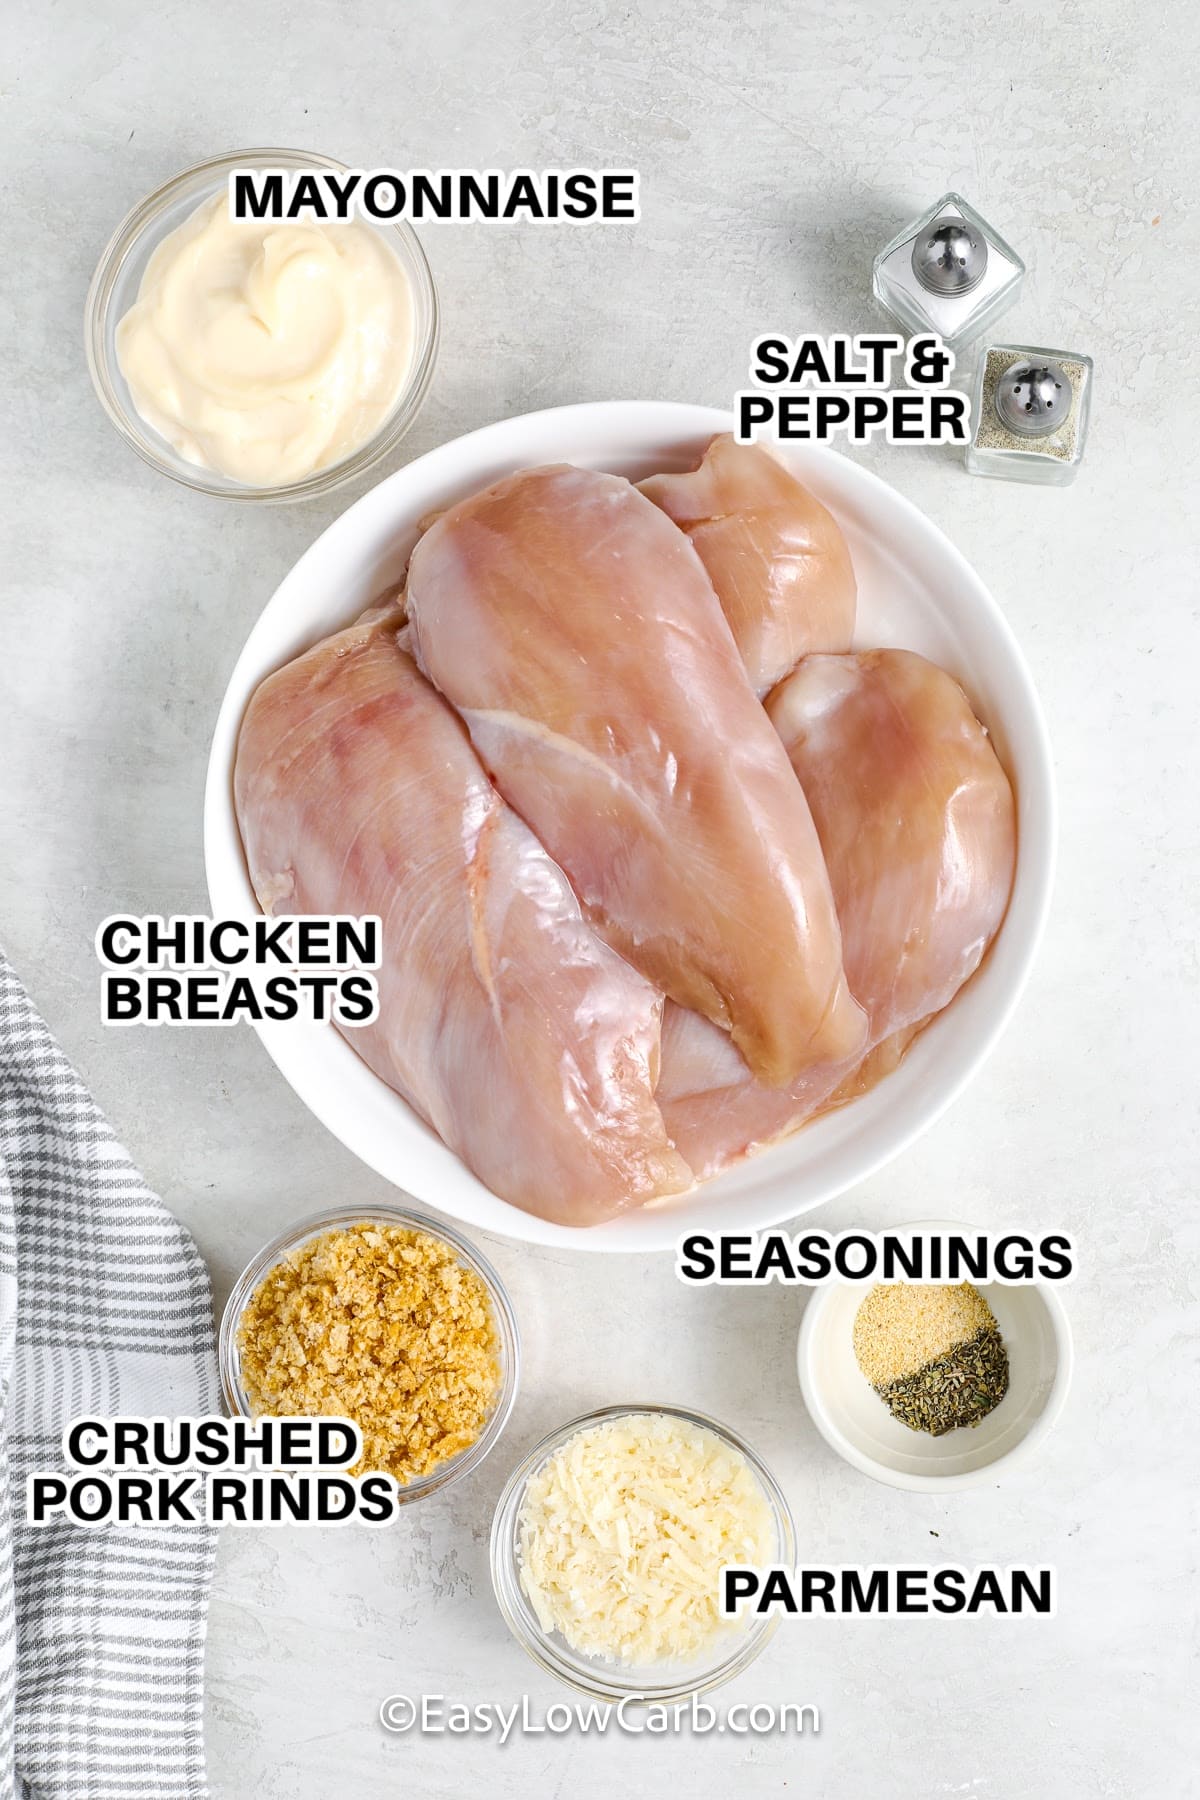 Ingredients to make Baked Parmesan Chicken labeled: Mayonnaise, Salt & Pepper, Chicken Breasts, Seasonings, Crushed Pork Rinds, Seasonings, and Parmesan.